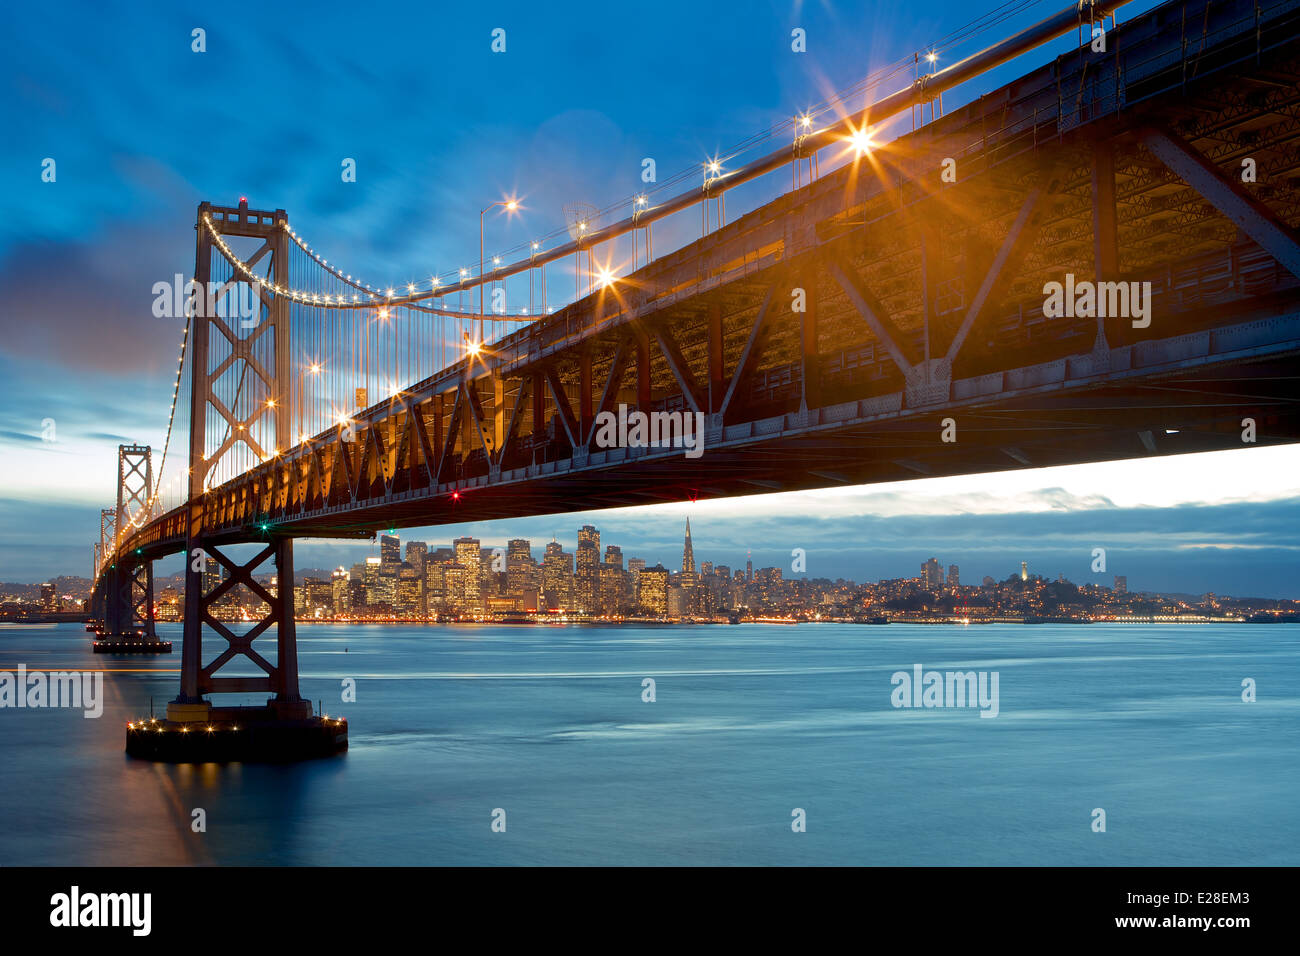 Twilight on San Francisco Bay with the San Francisco-Oakland Bay Bridge and the San Francisco skyline. Stock Photo